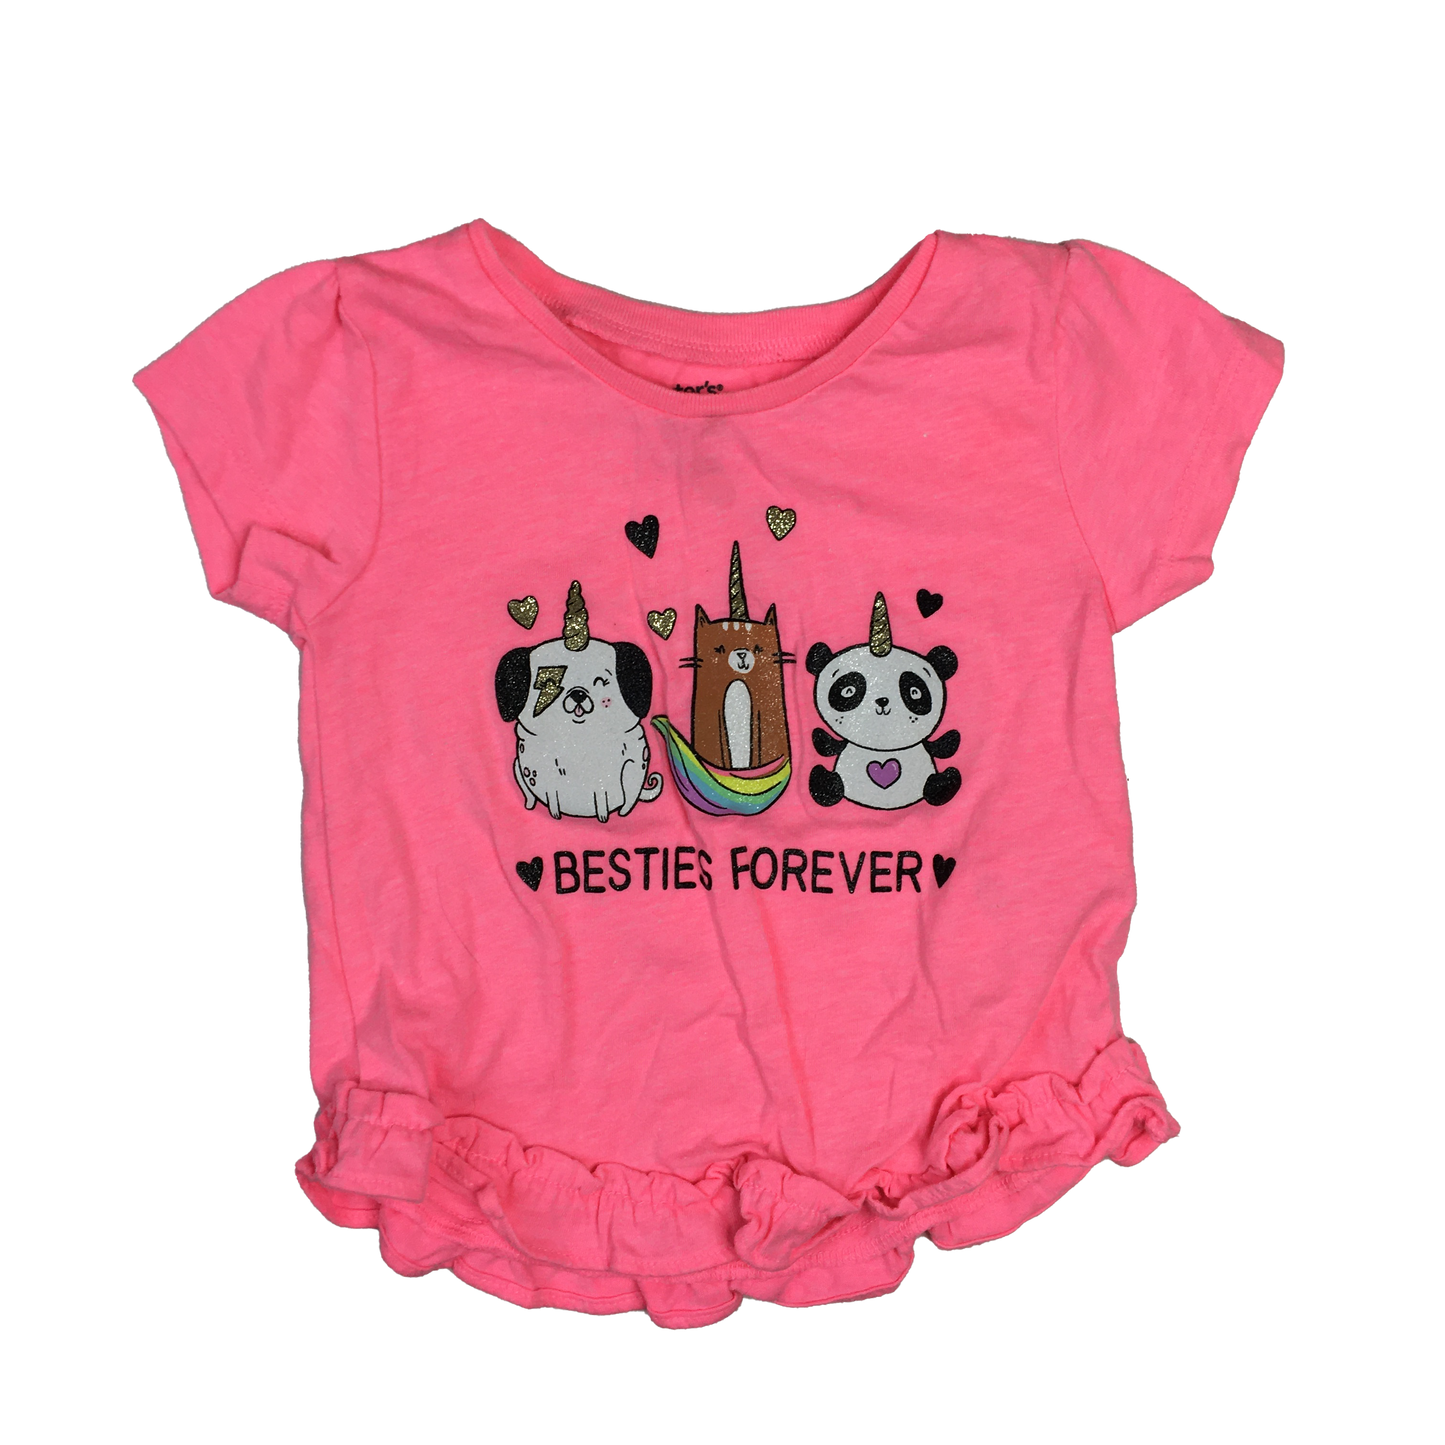 Carter's Pink T-Shirt "Besties Forever" 18M